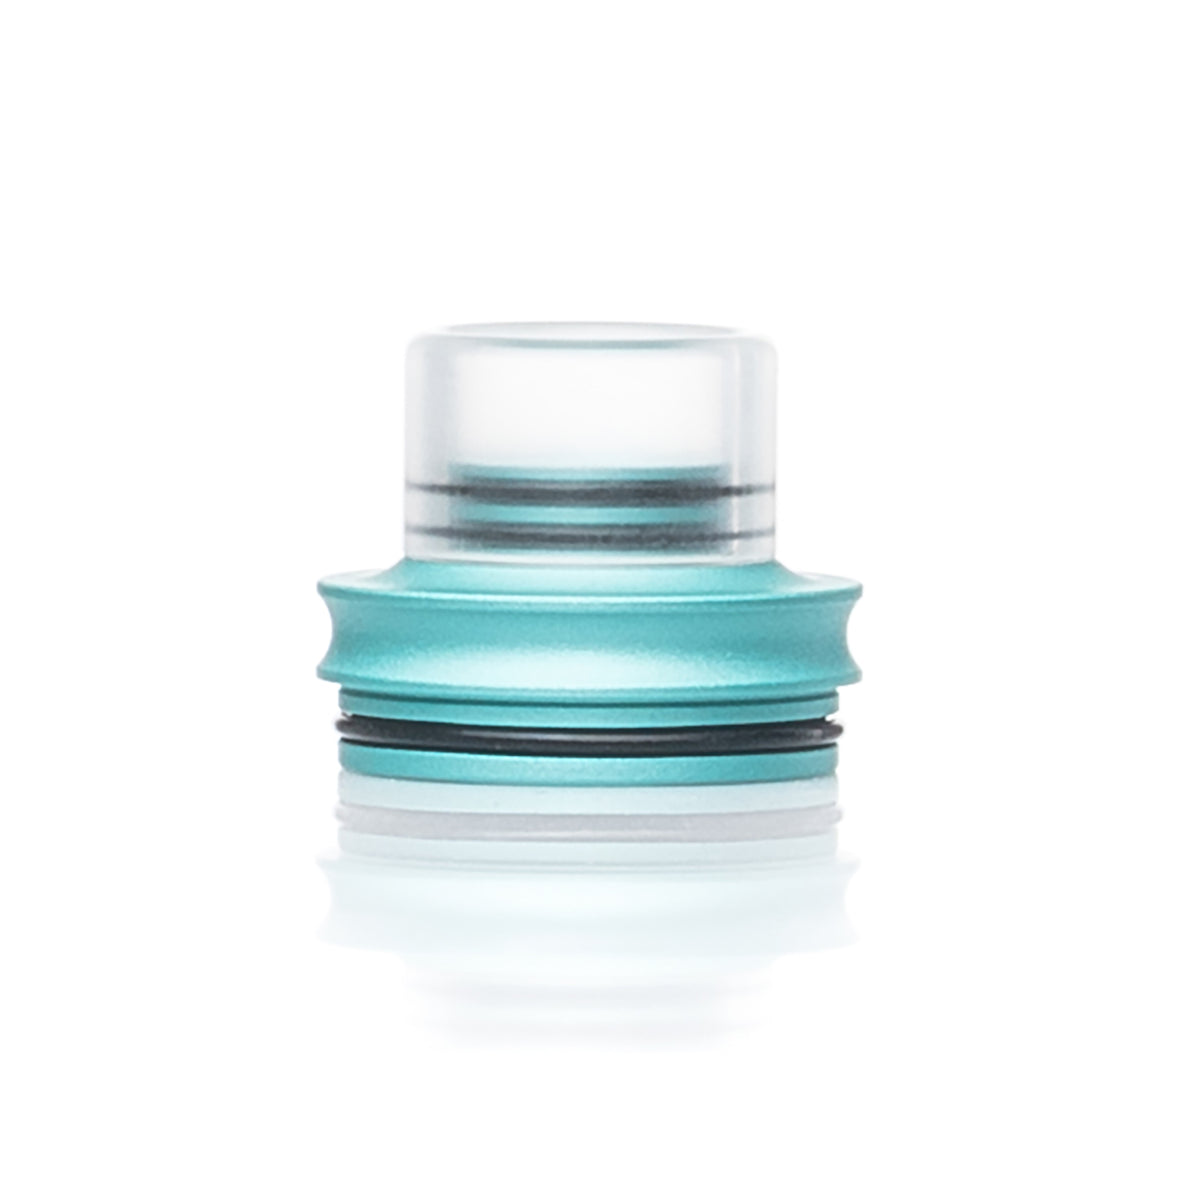 Tiffany Blue dotCap | Vape Products Online - DotMod